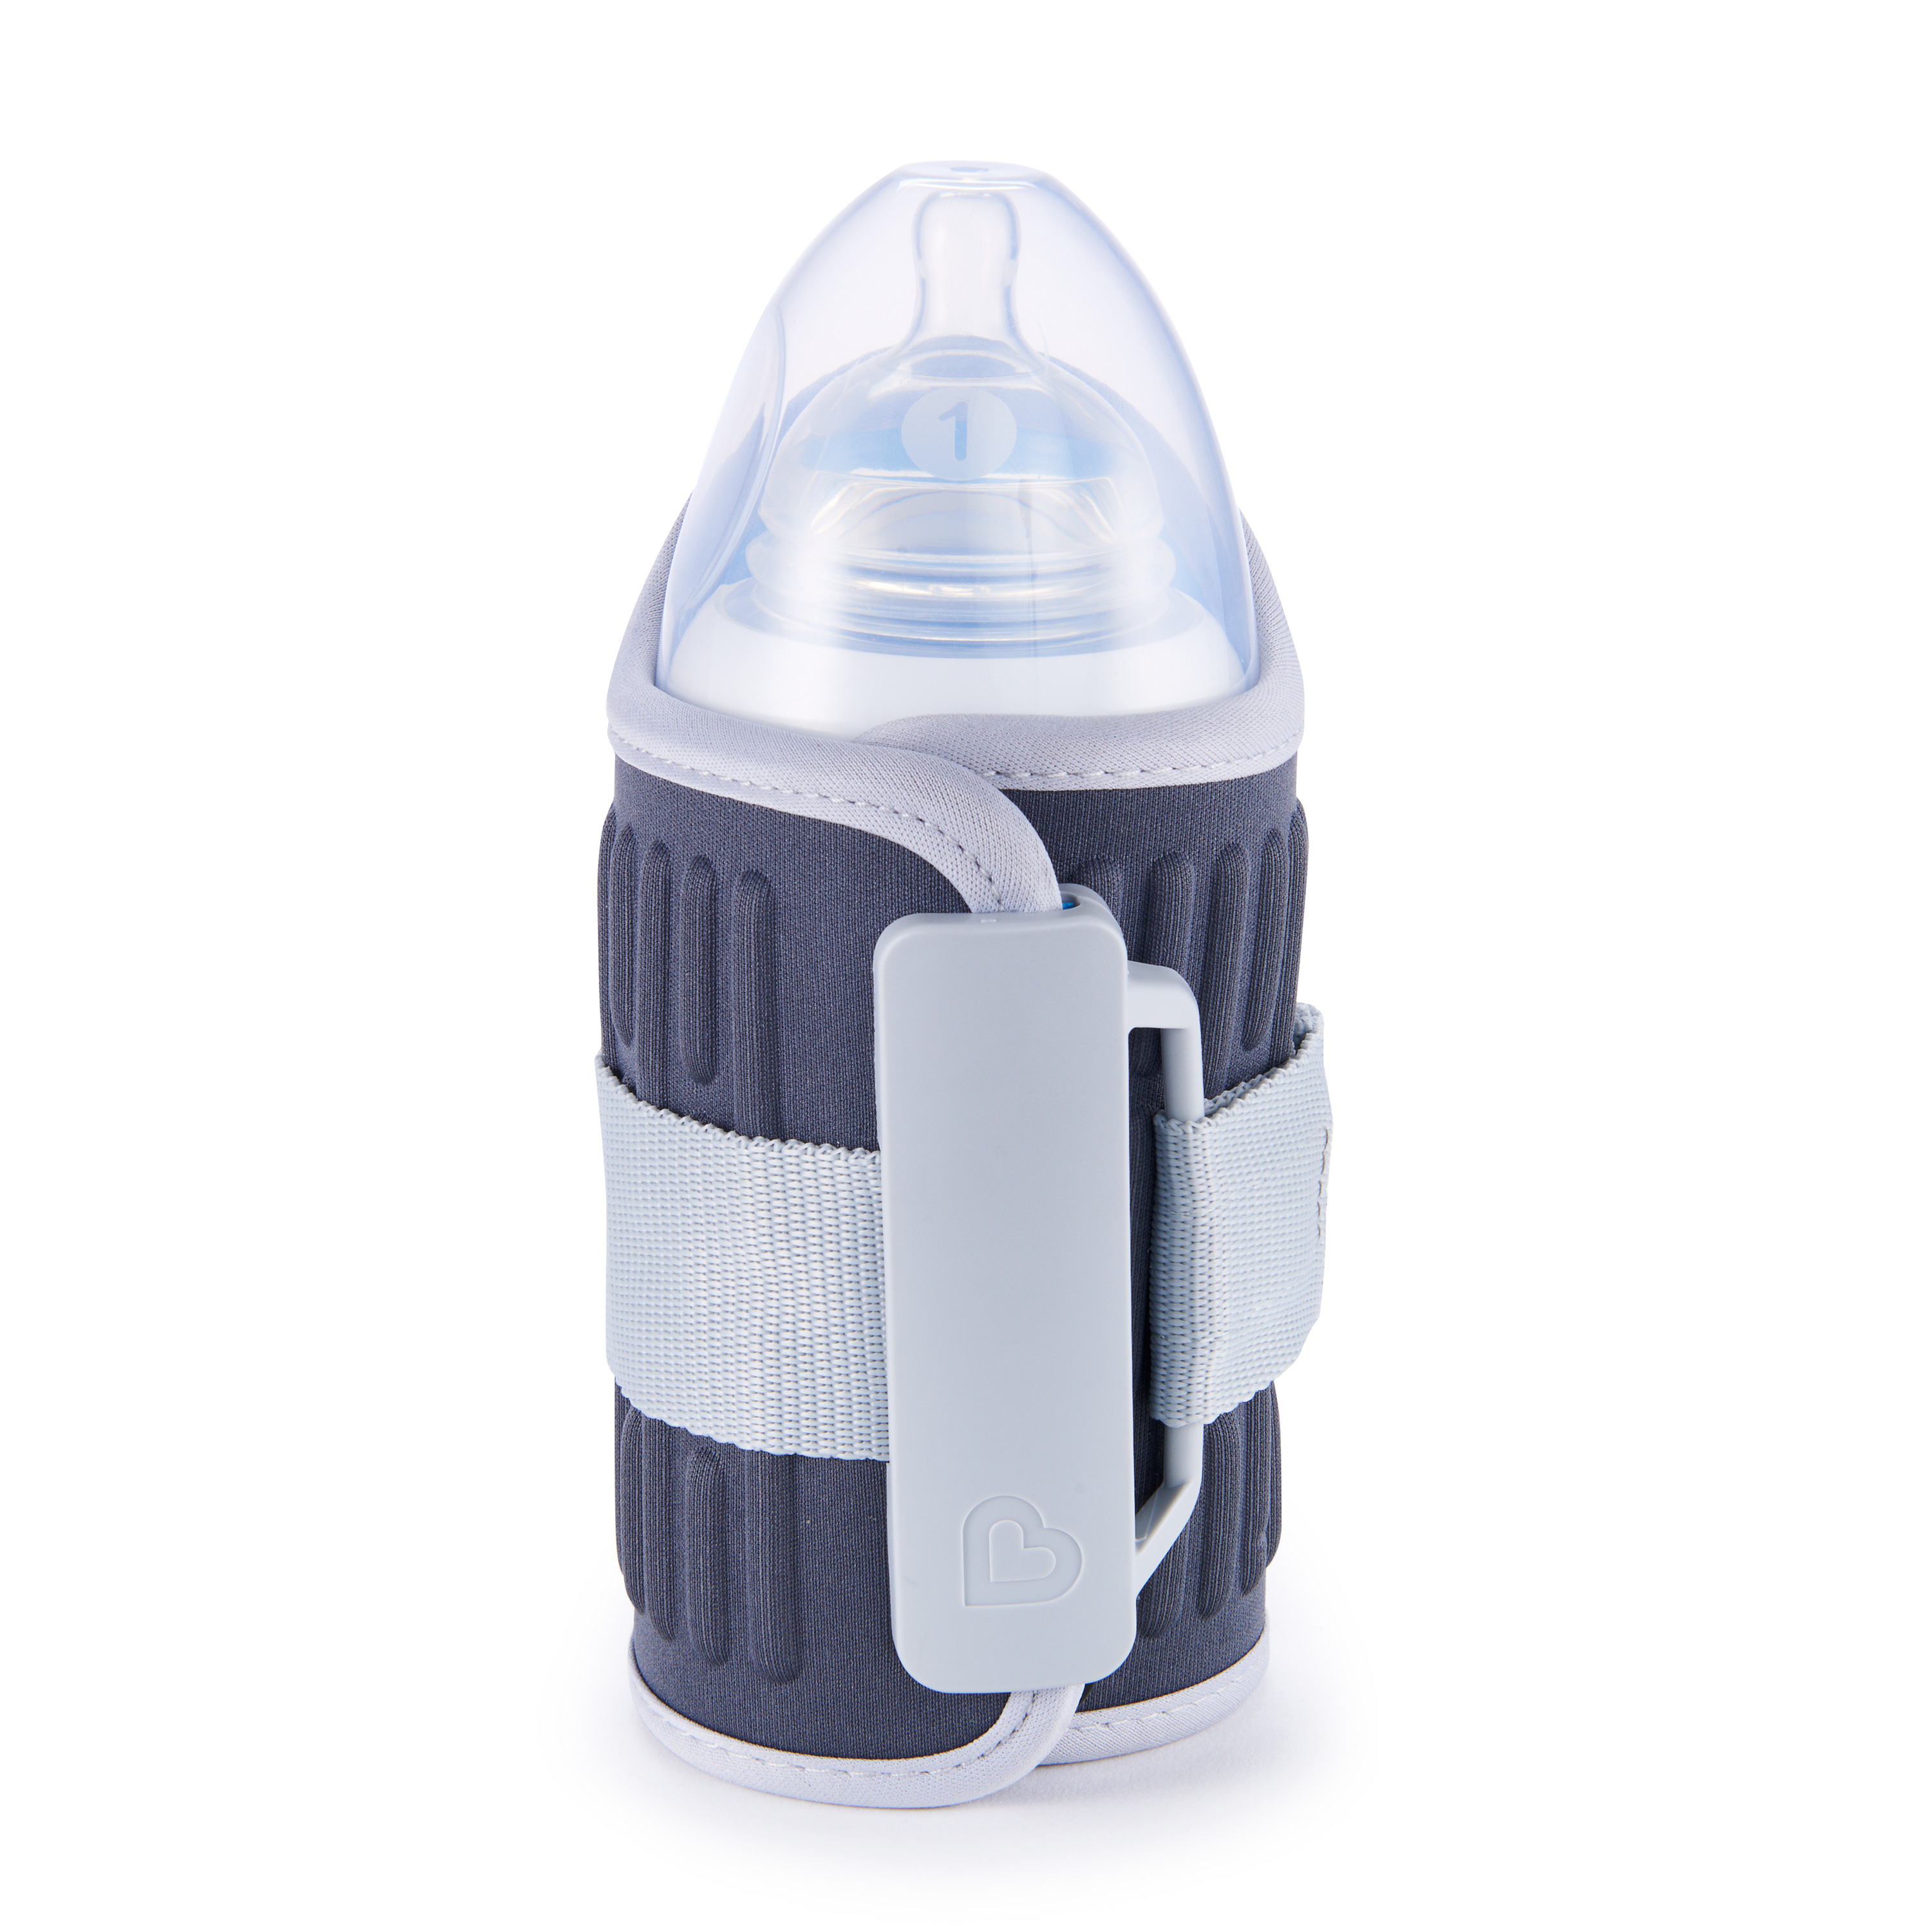 Munchkin Travel Car Baby Bottle Warmer, Grey - image 4 of 5